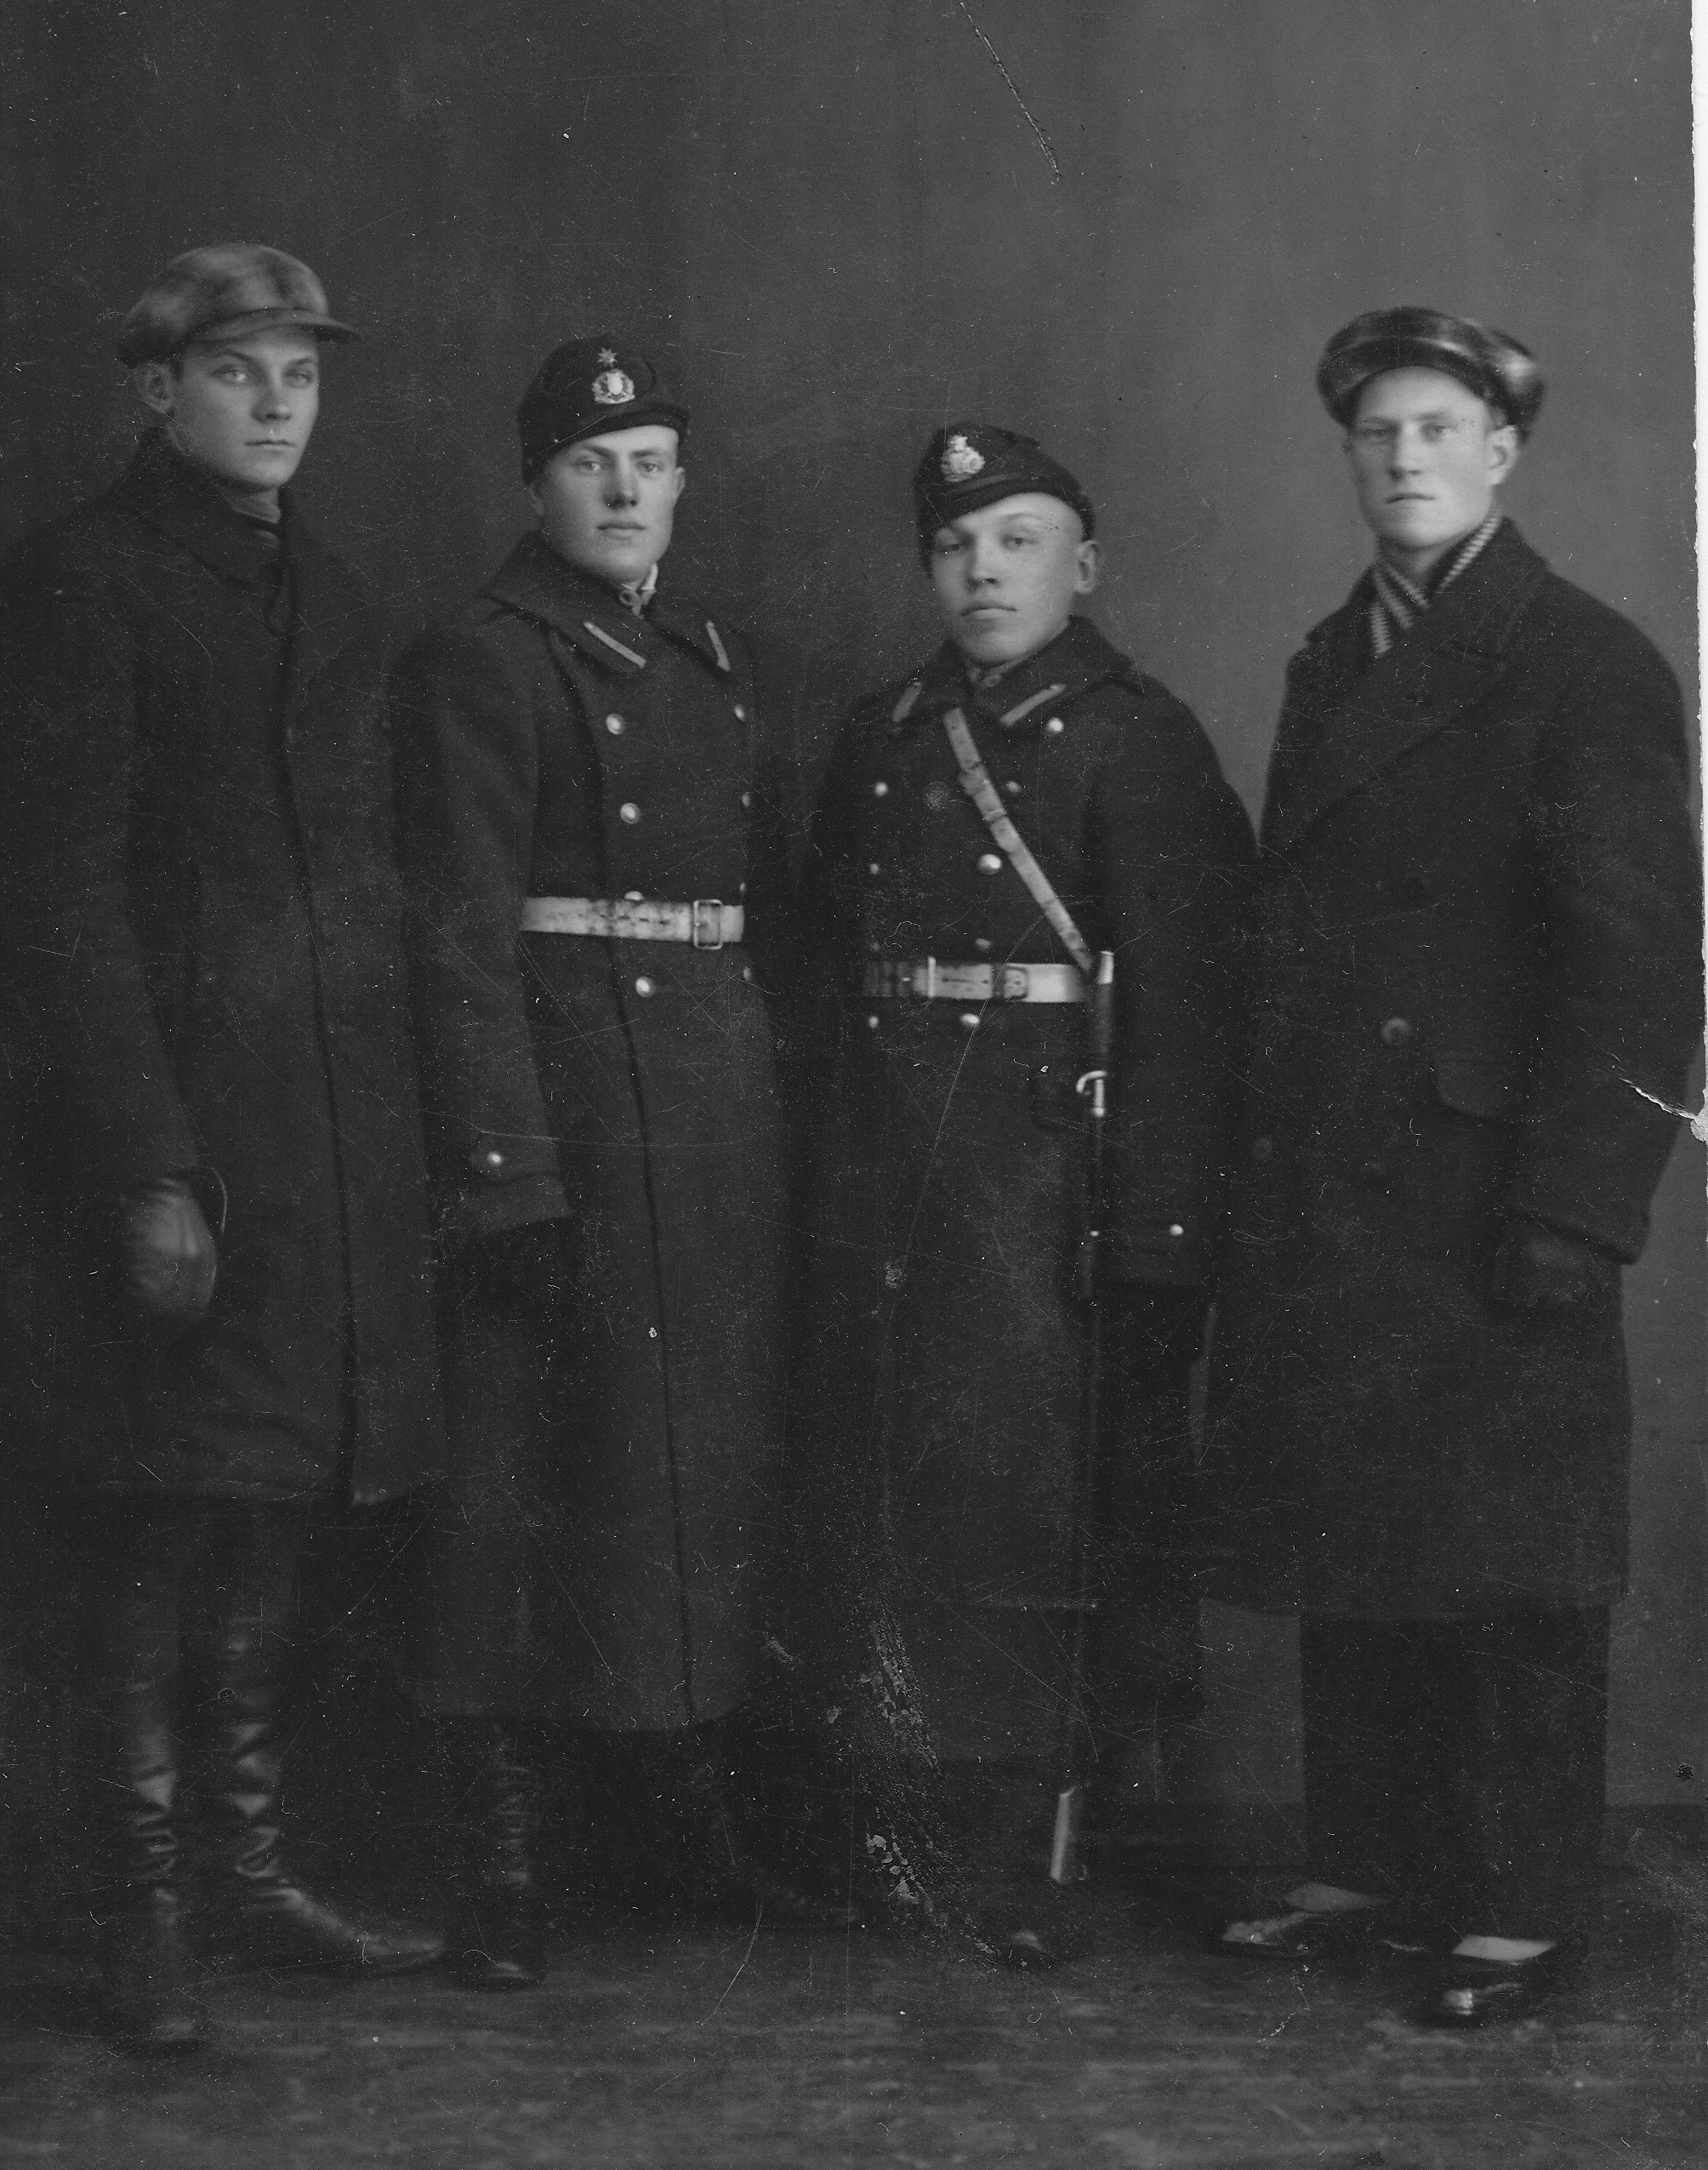 Viljandi 1930s, time service in the riding army